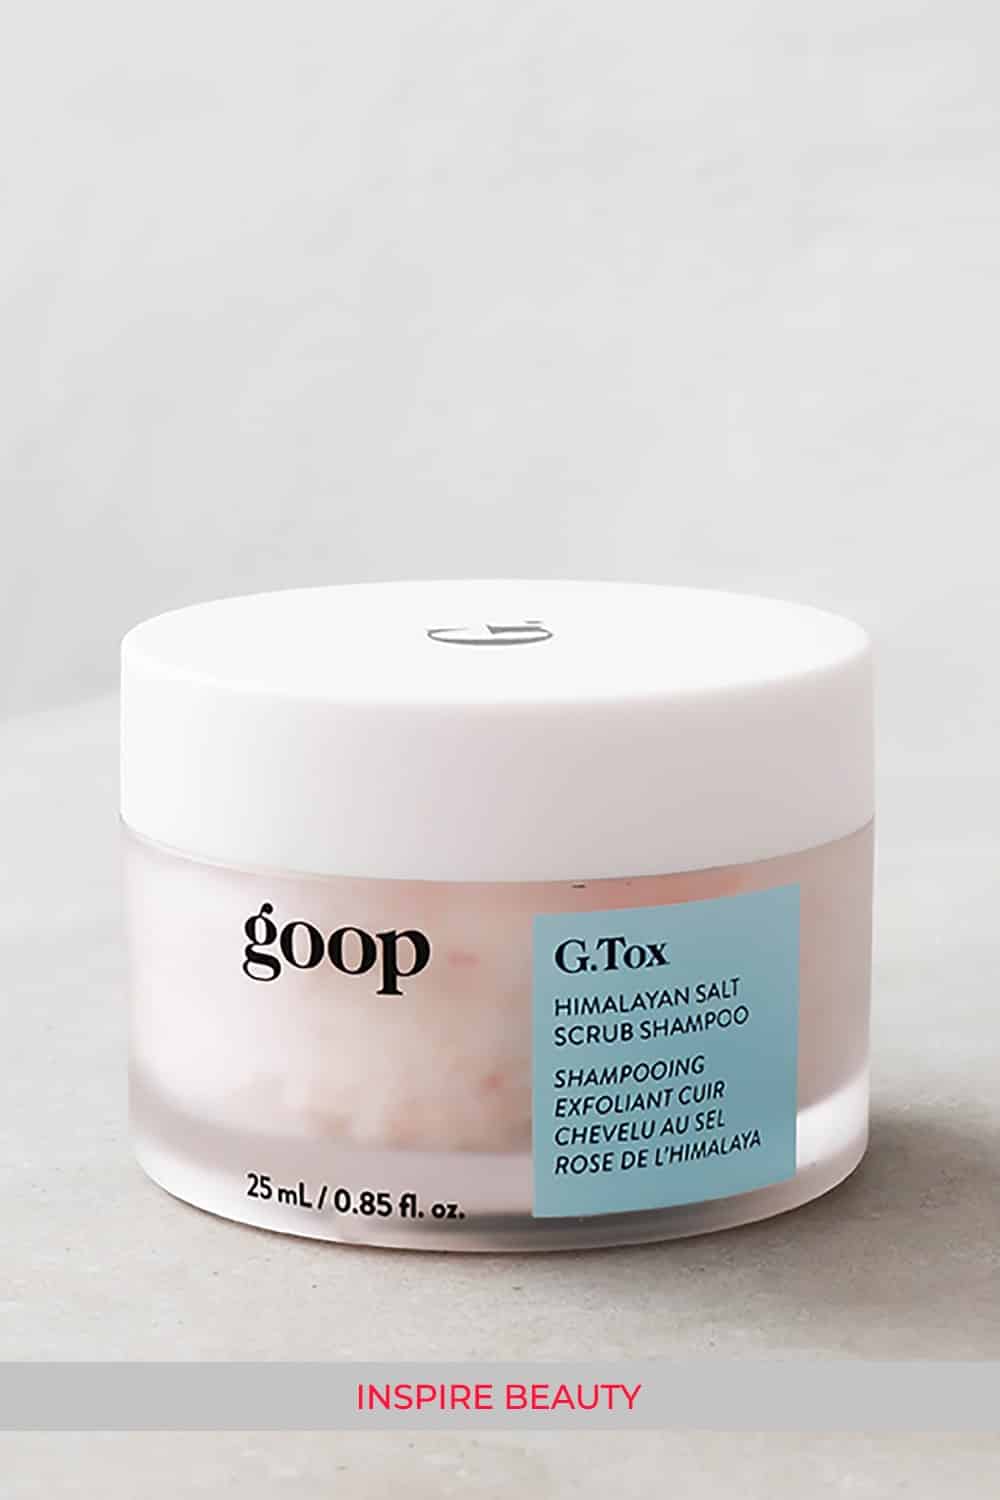 GOOP G.Tox Himalayan Salt Scalp Scrub Shampoo review